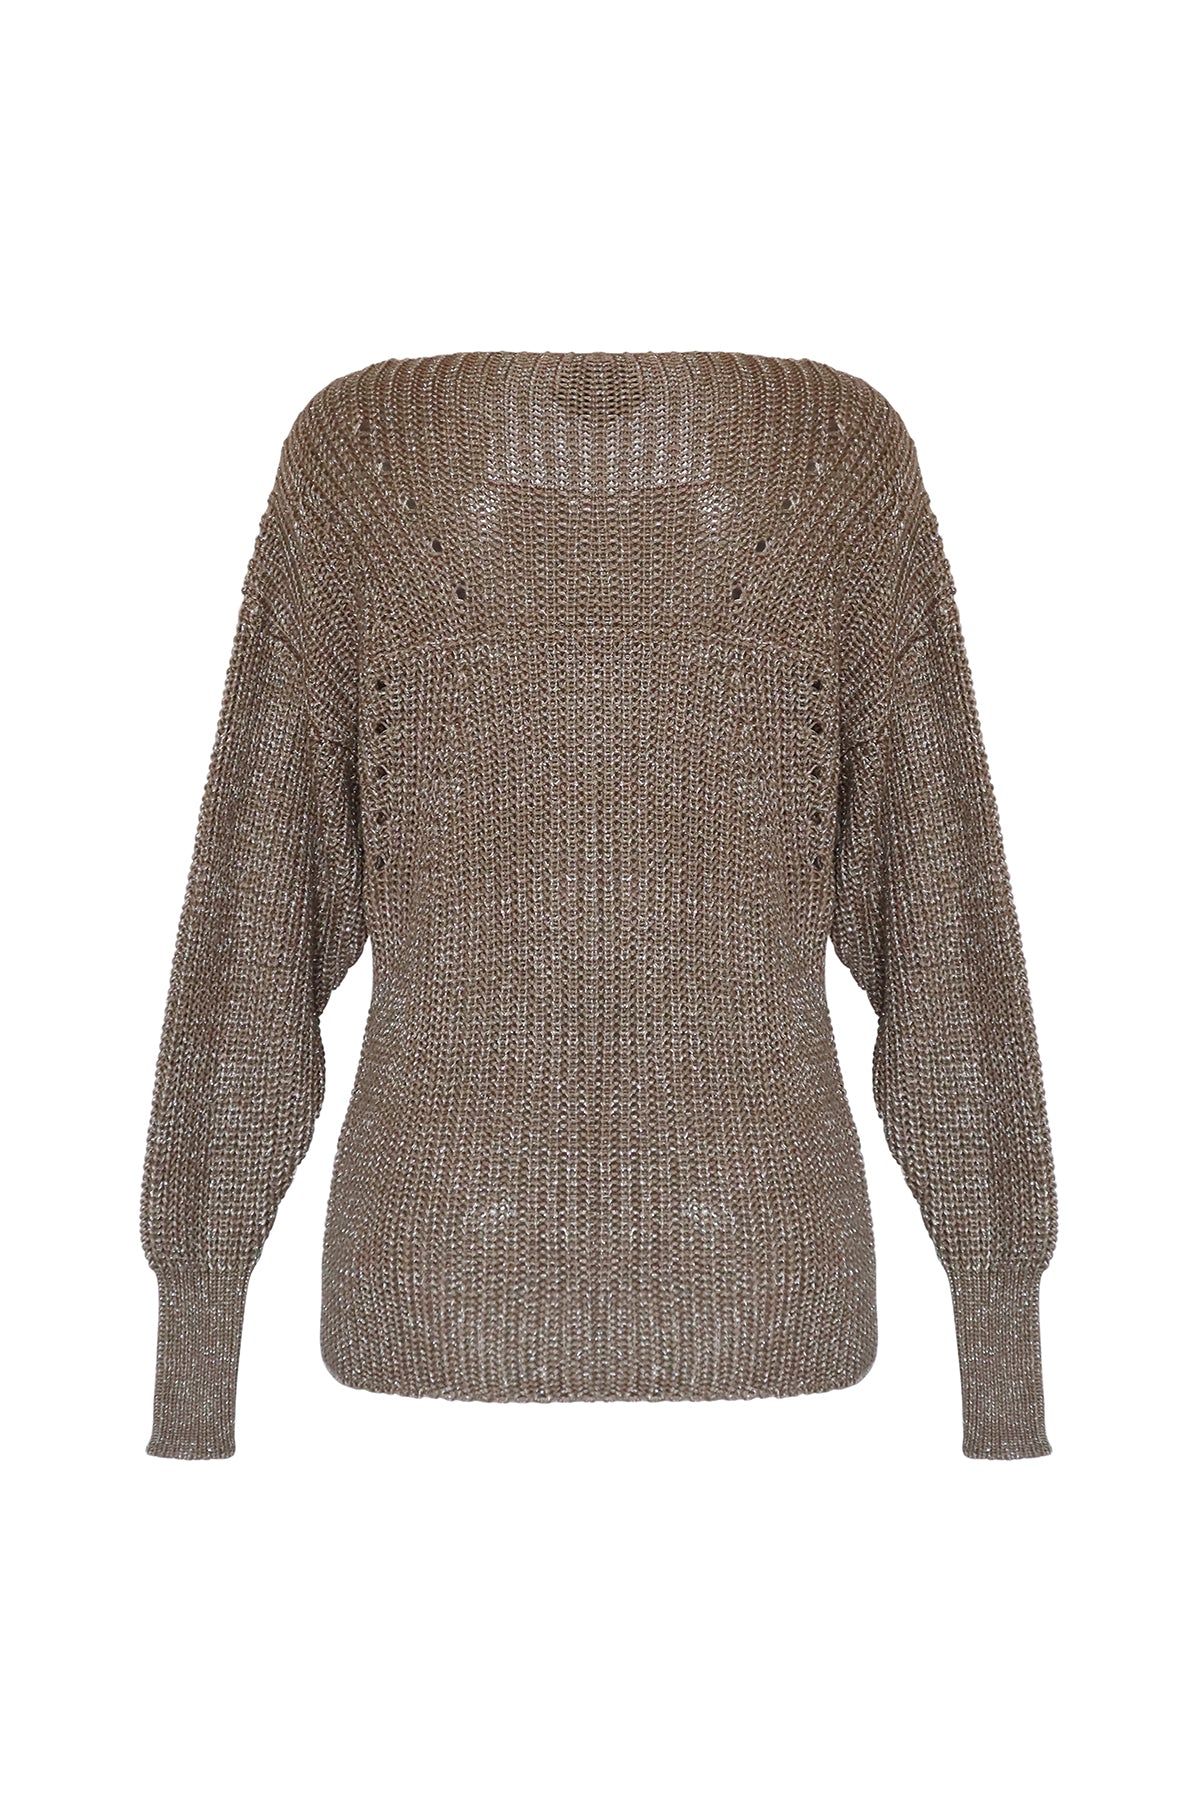 Lurex Effect Sweater – Taupe